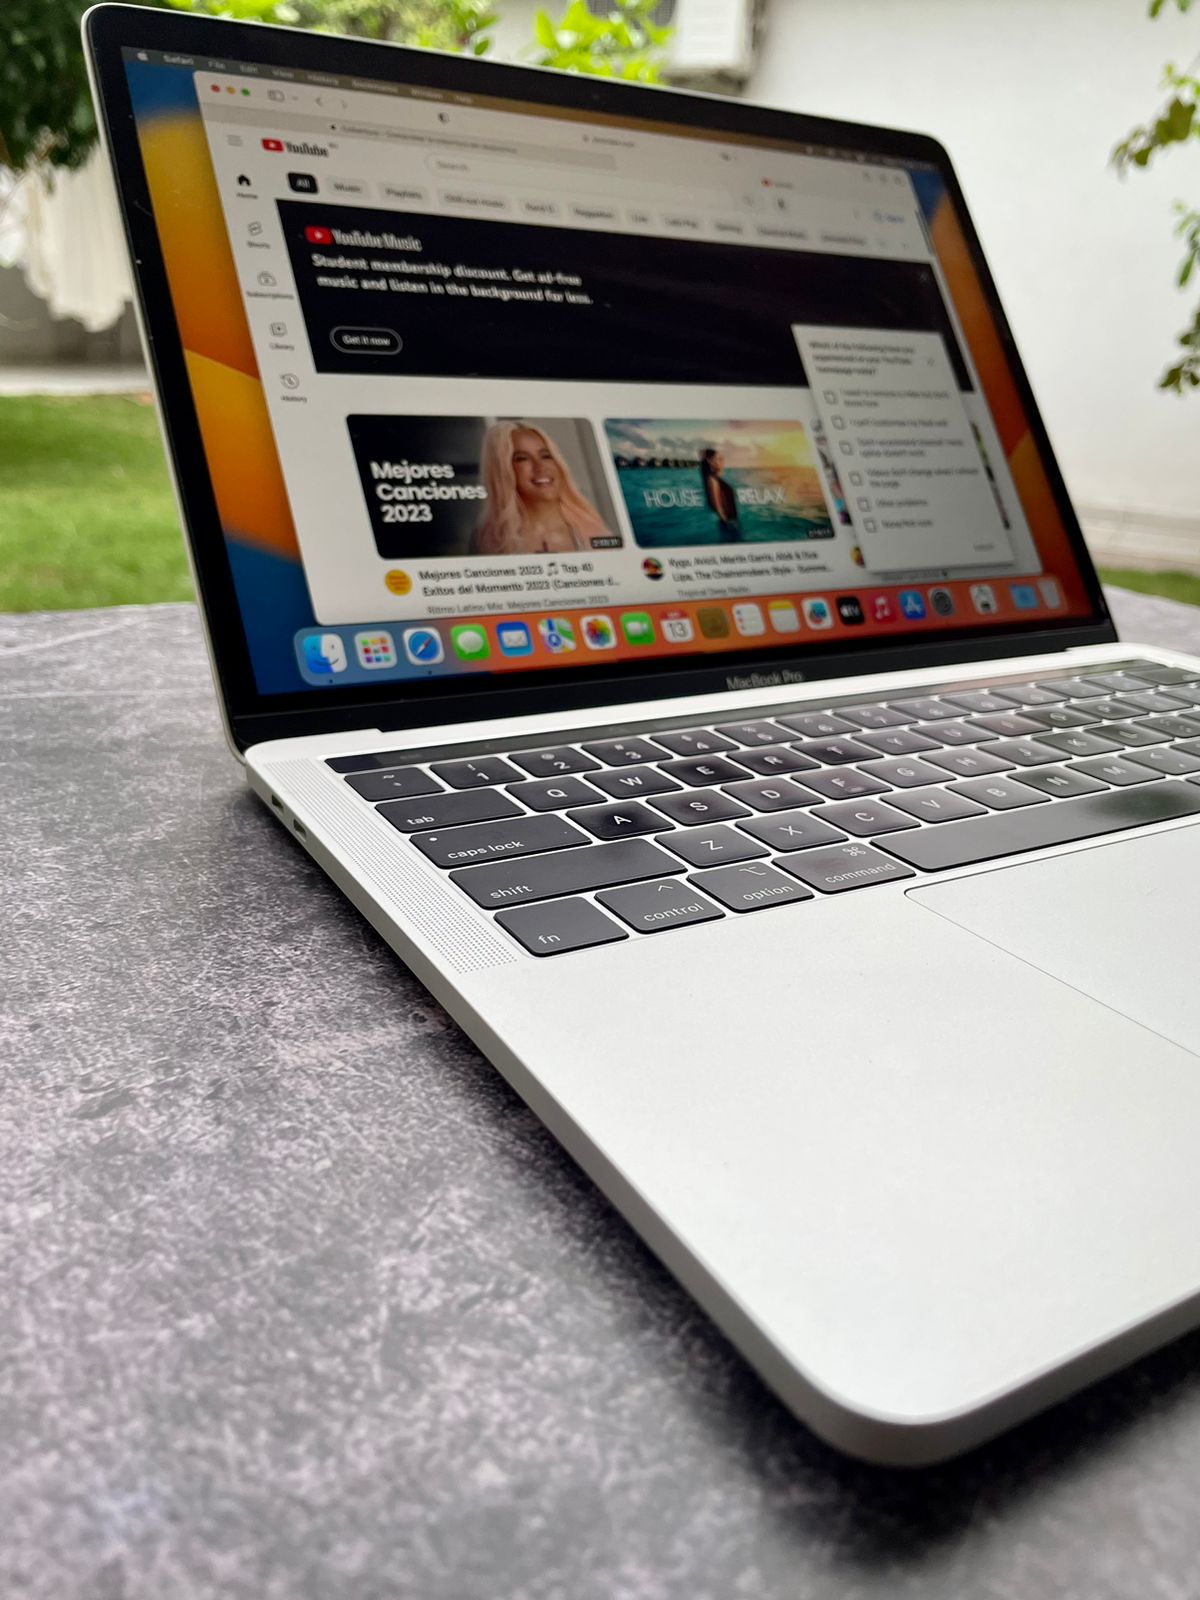 Macbook Pro 2018 con TouchBar- 512GB, i5, 16GB